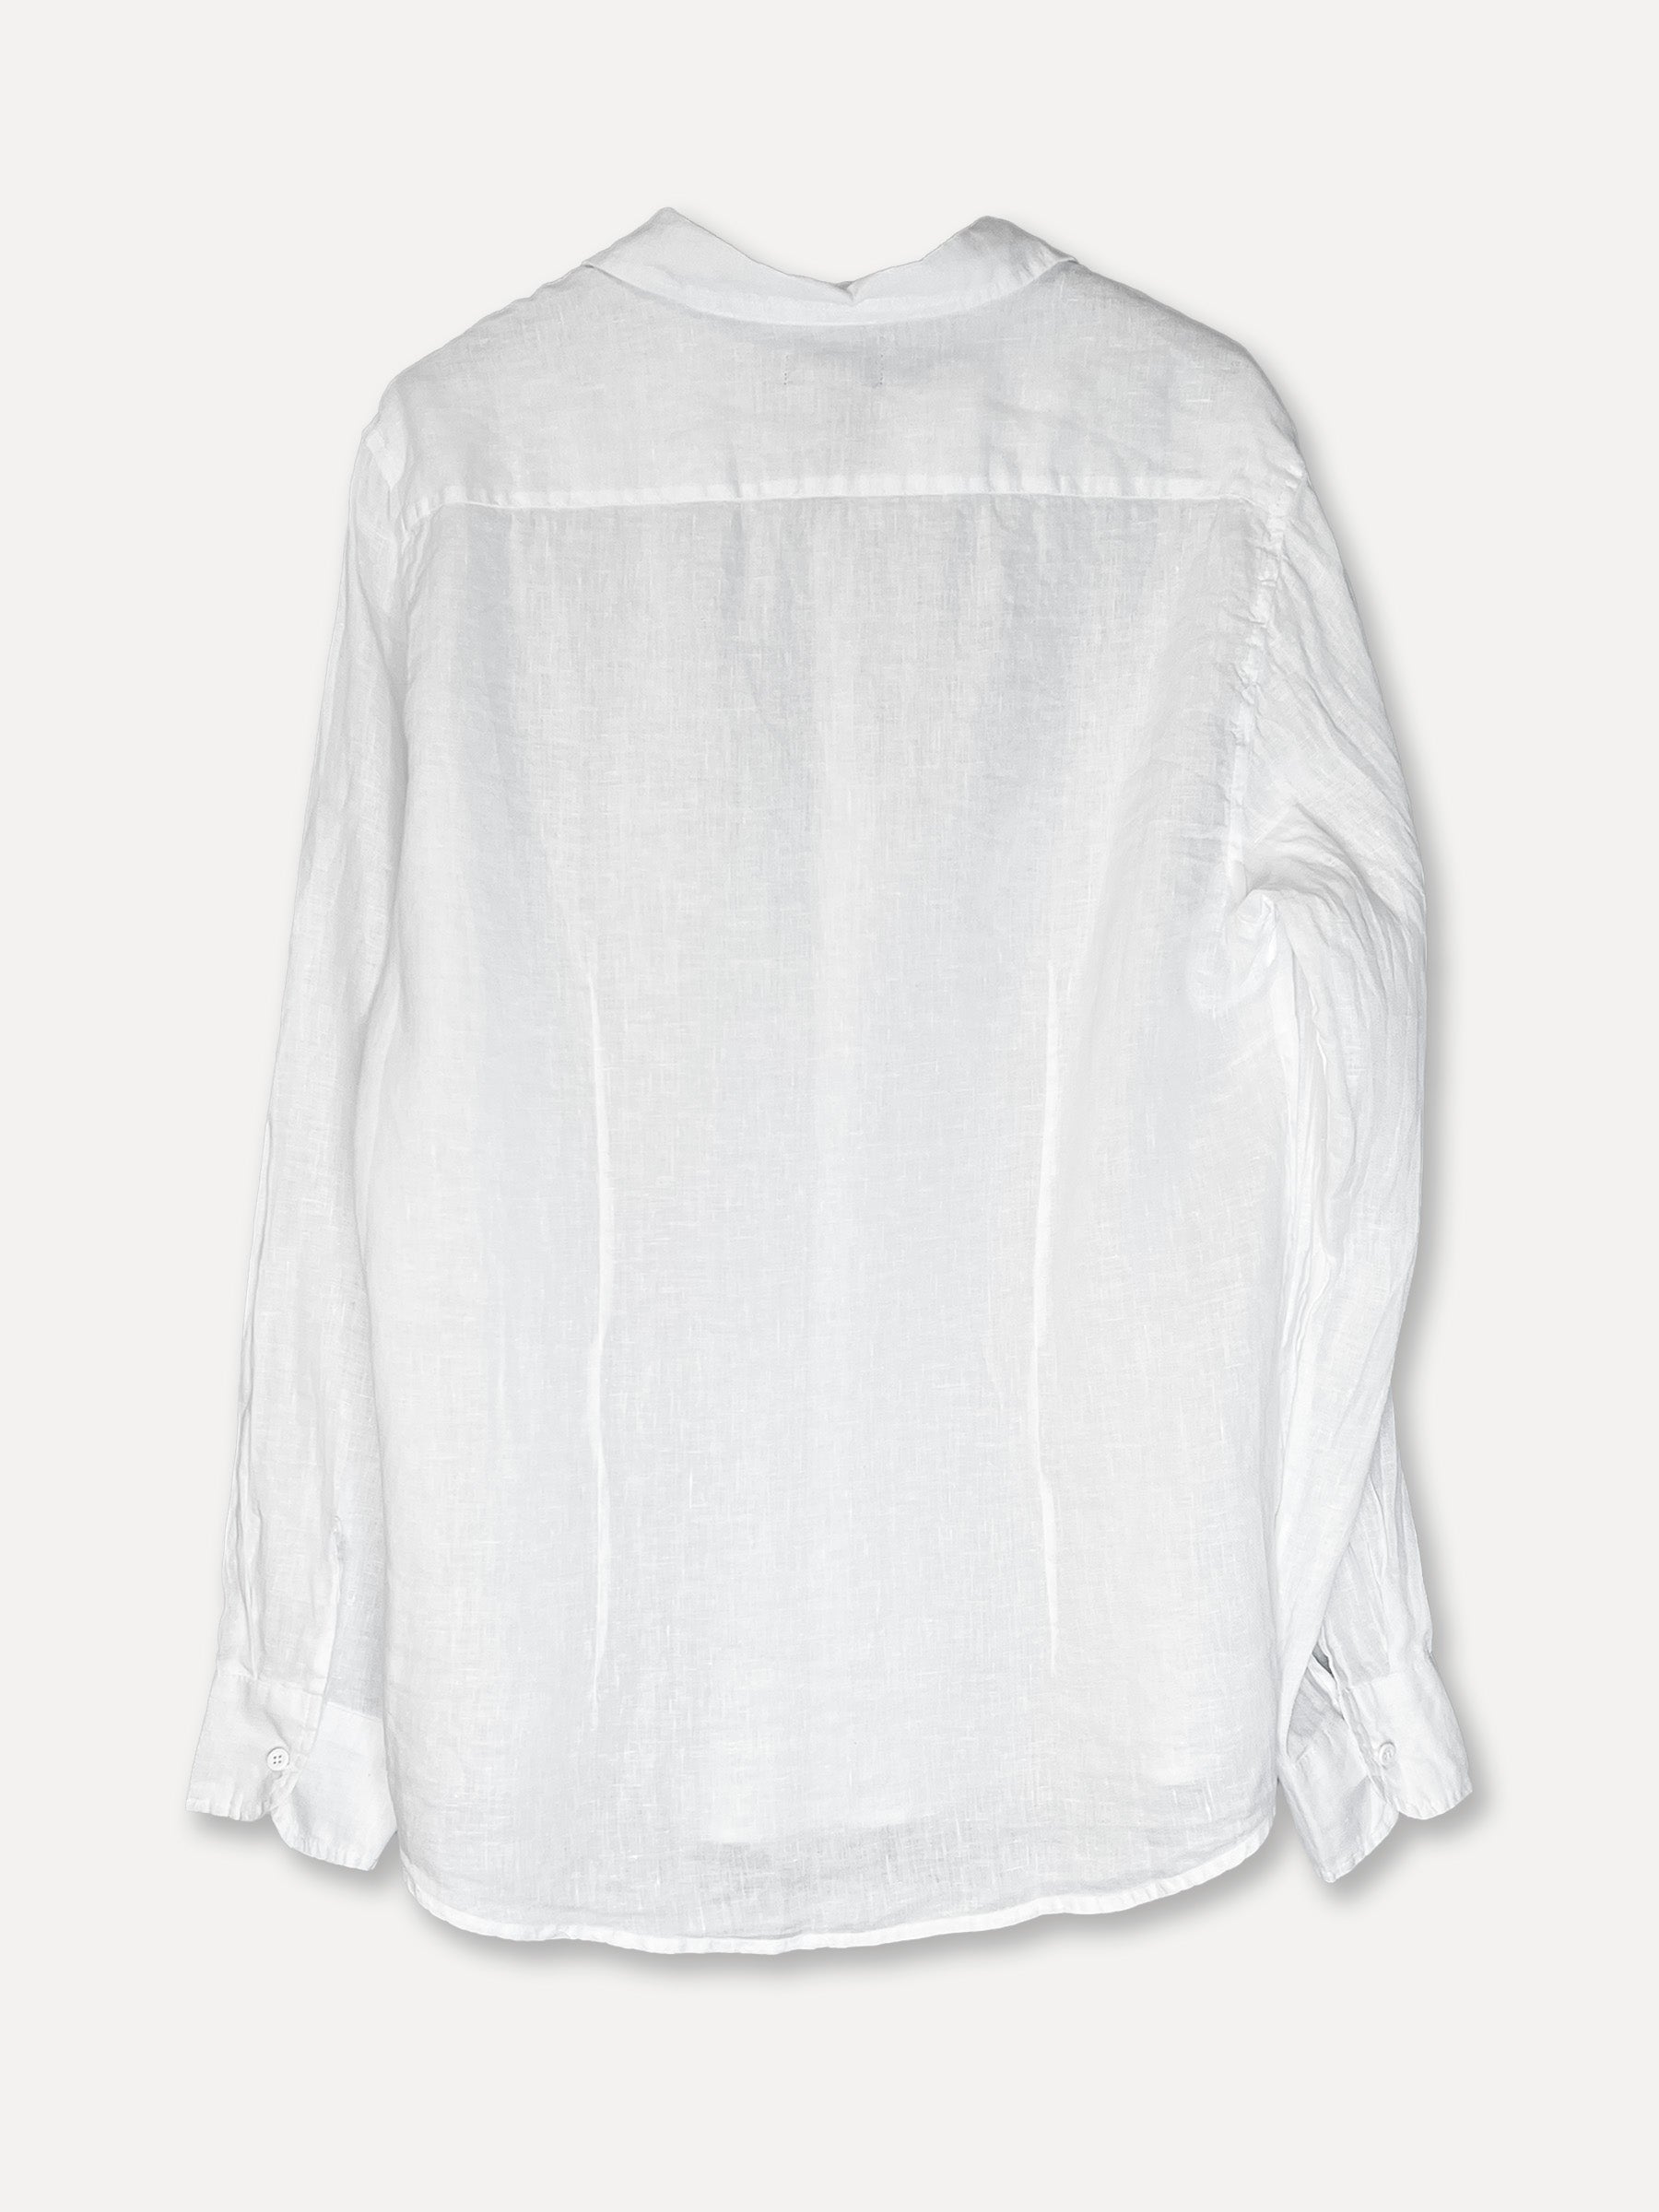 ABBE Shirt, White / 4-Pack